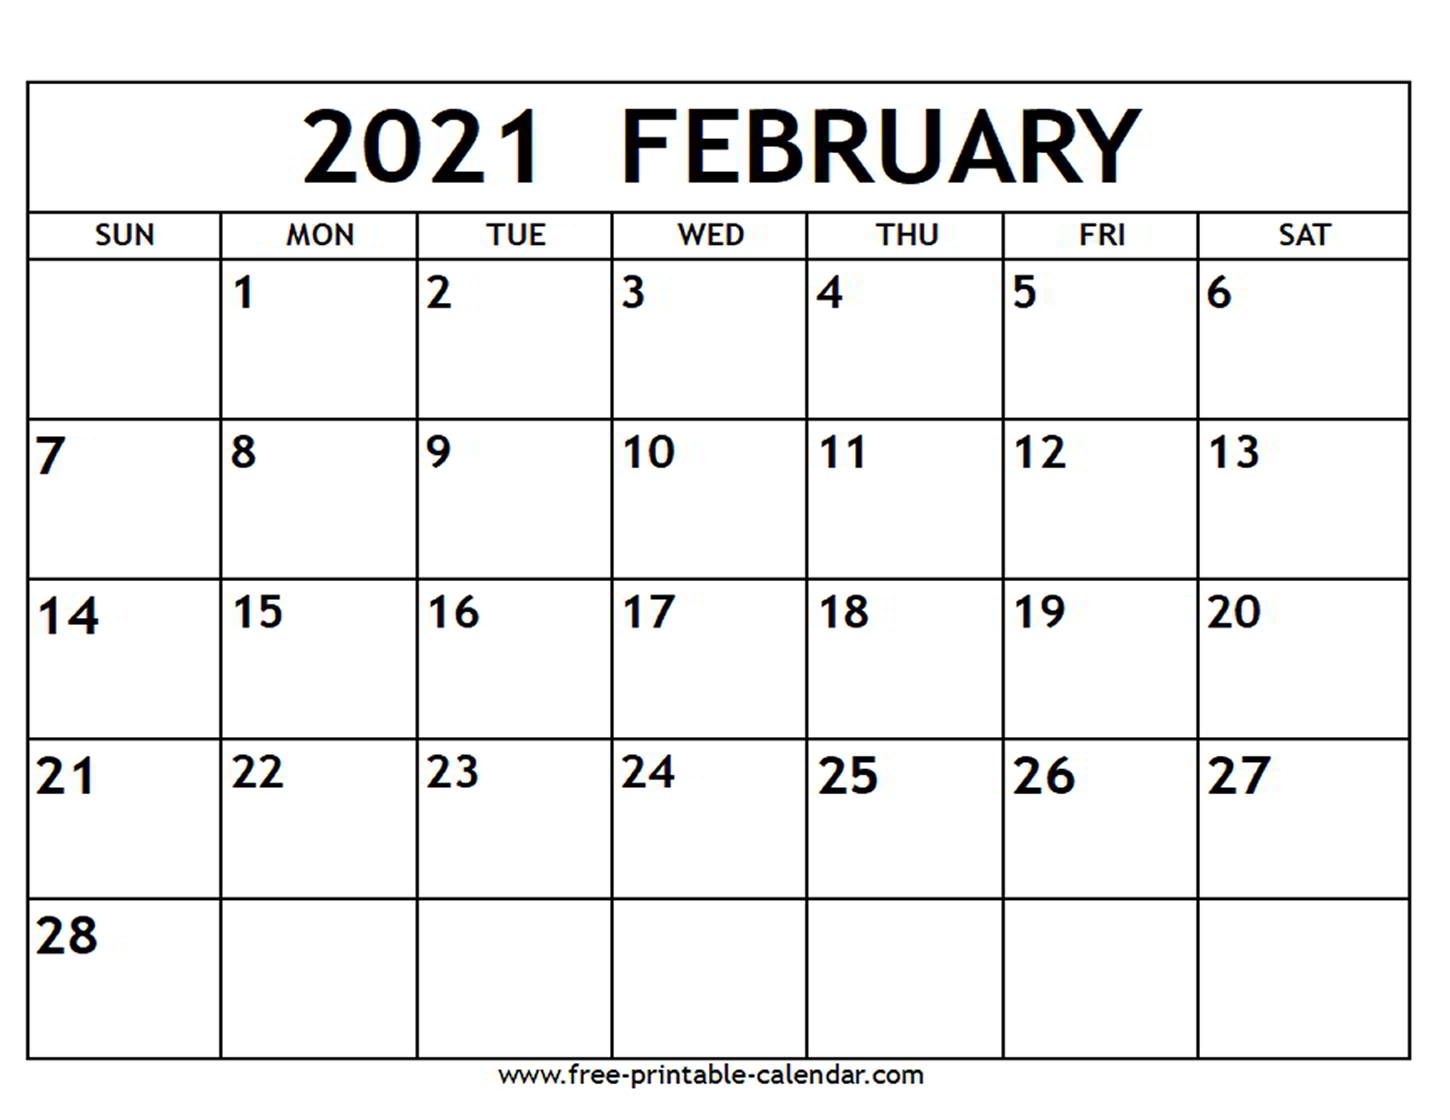 february 2021 printable calendar